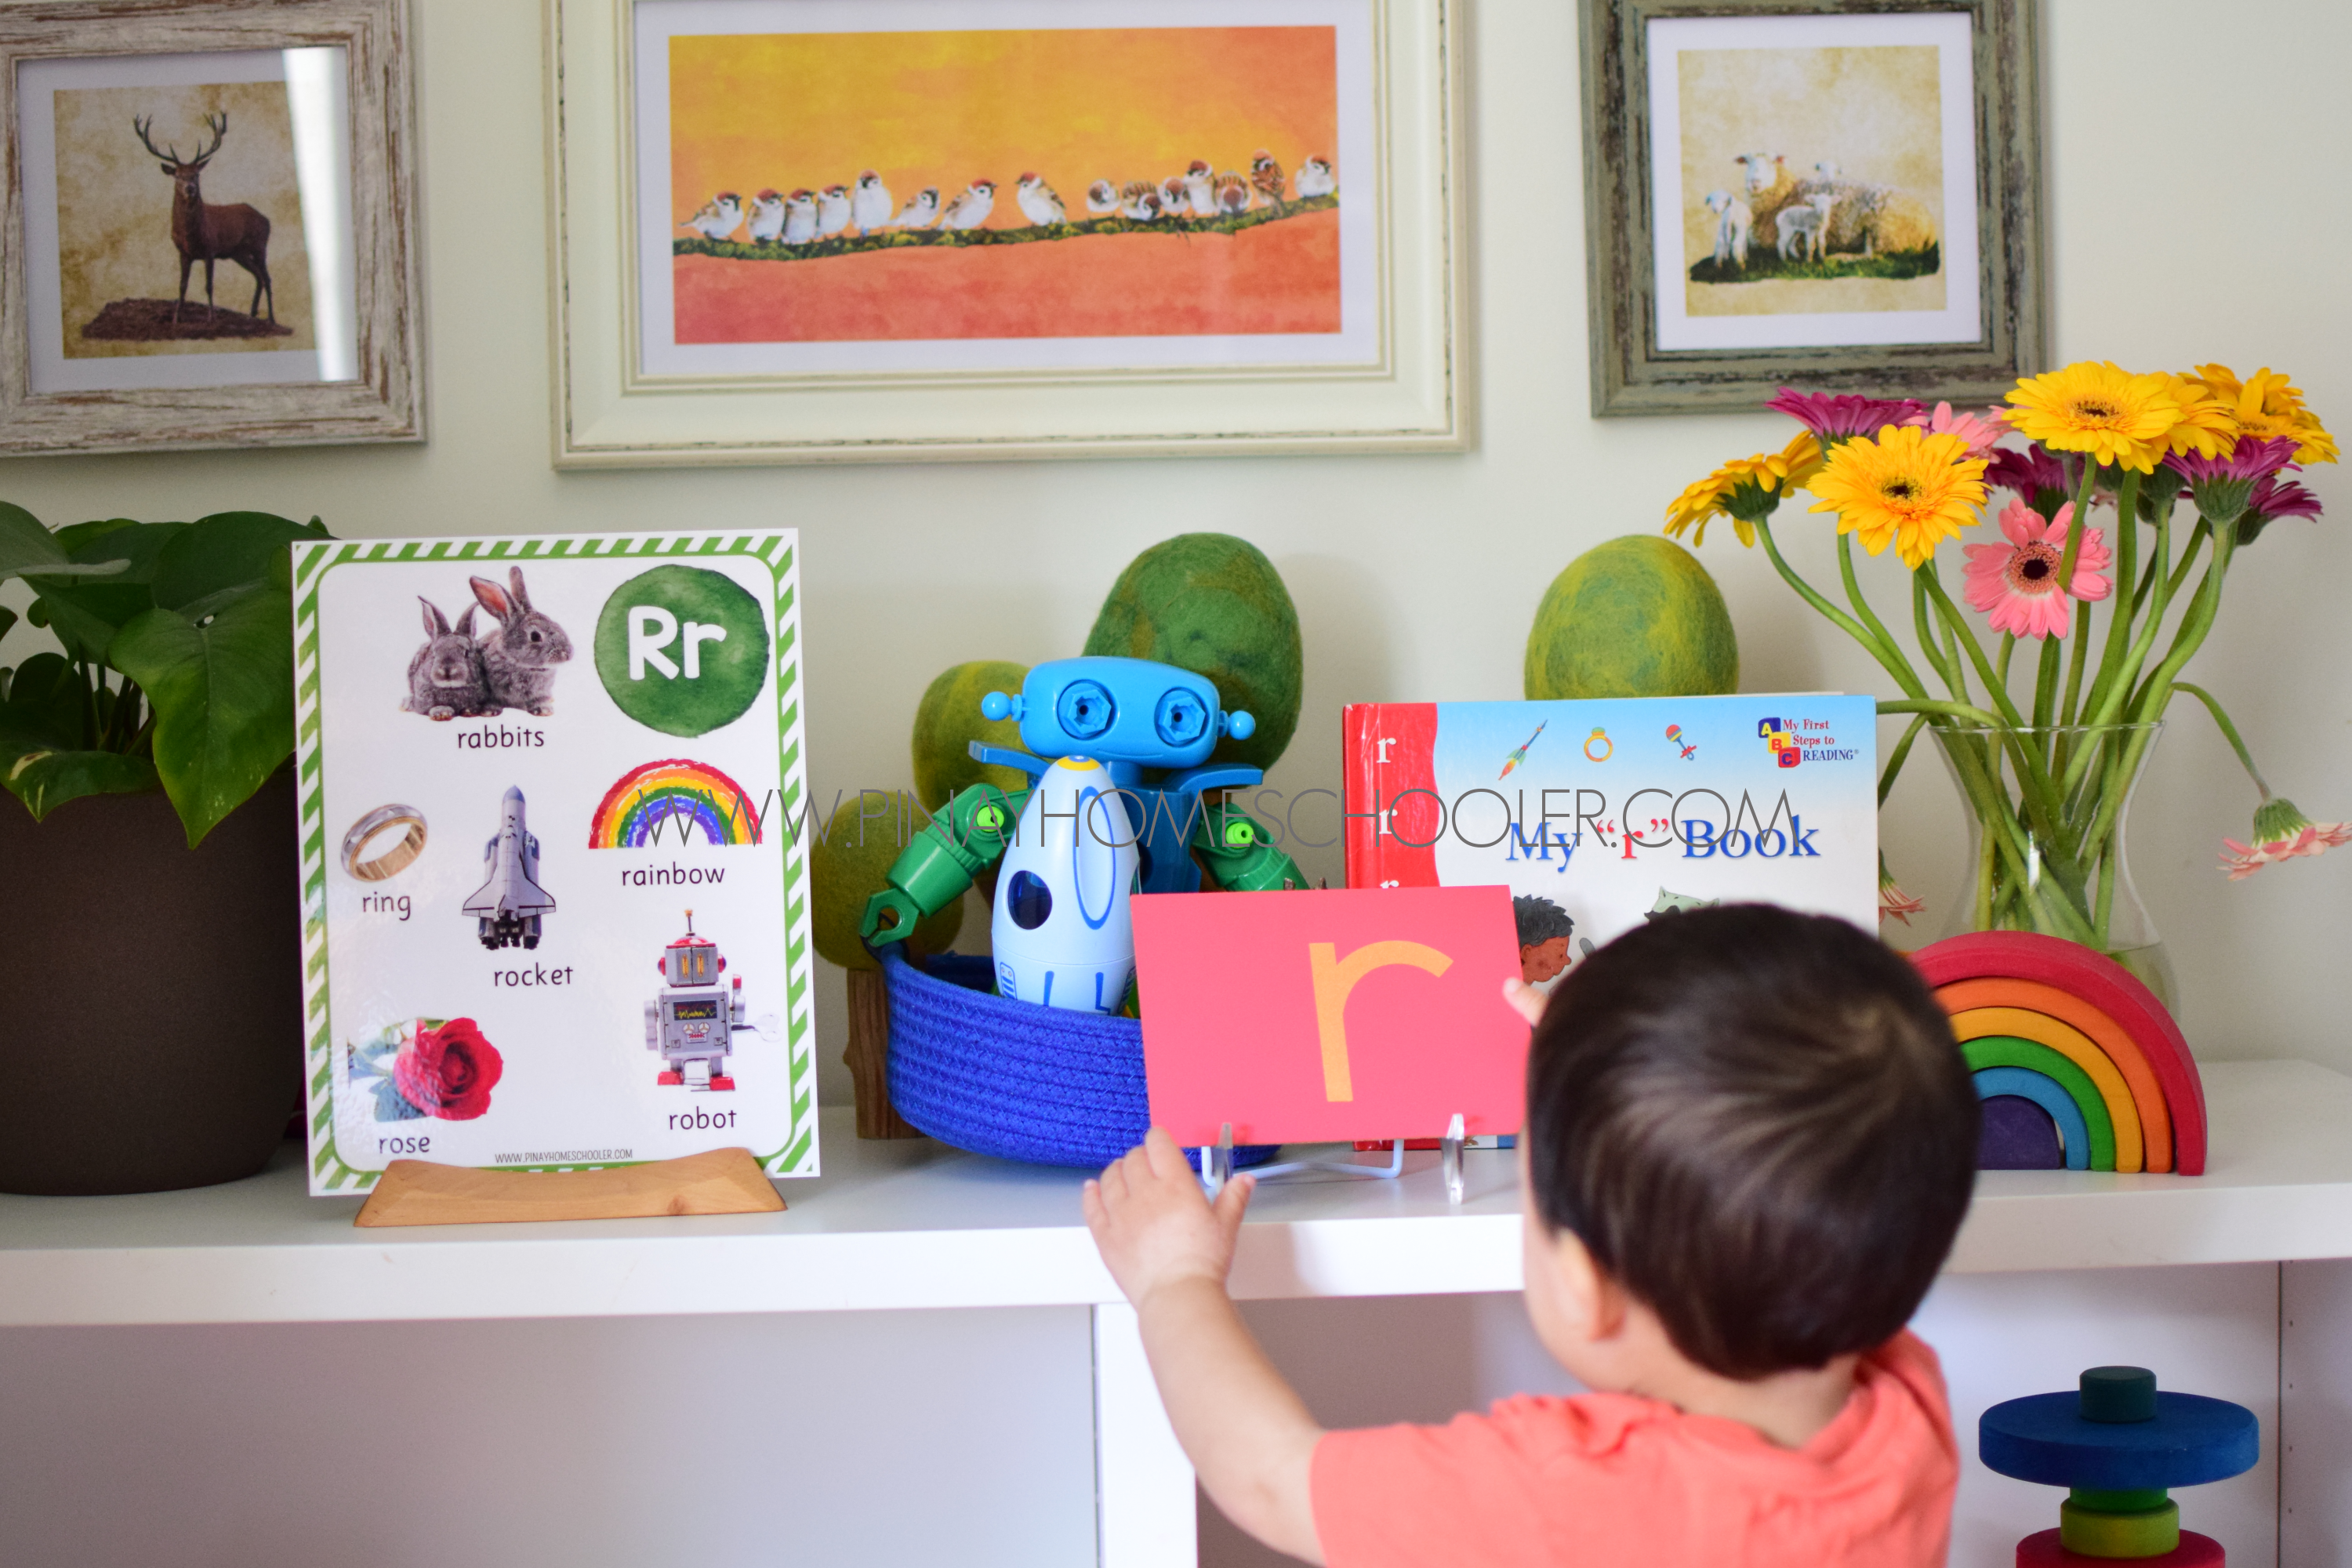 Montessori Activity Trays at 21 Months